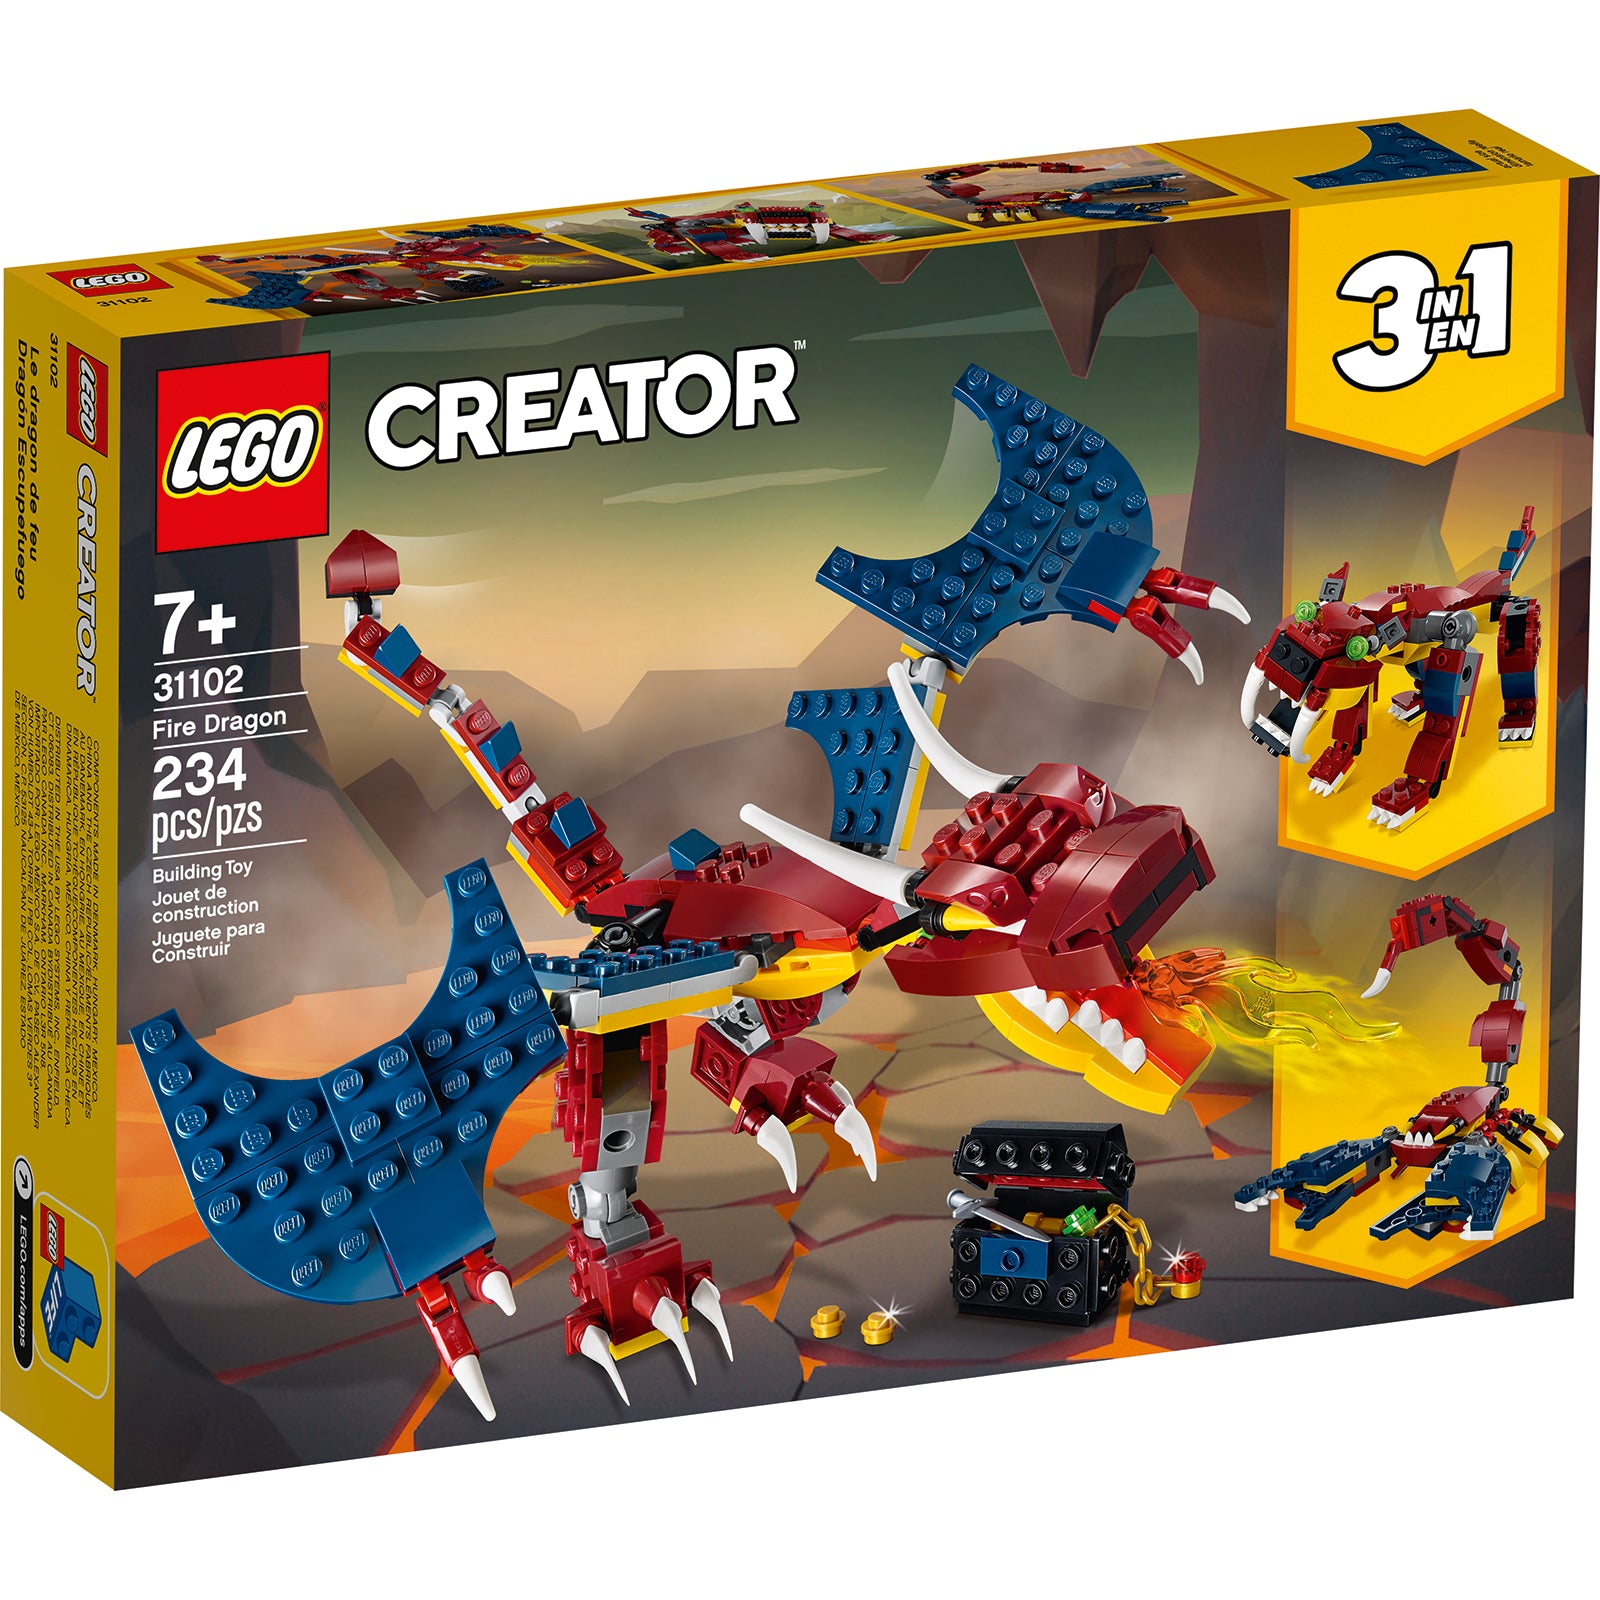 Retired Set 31102 Creator Fire Dragon